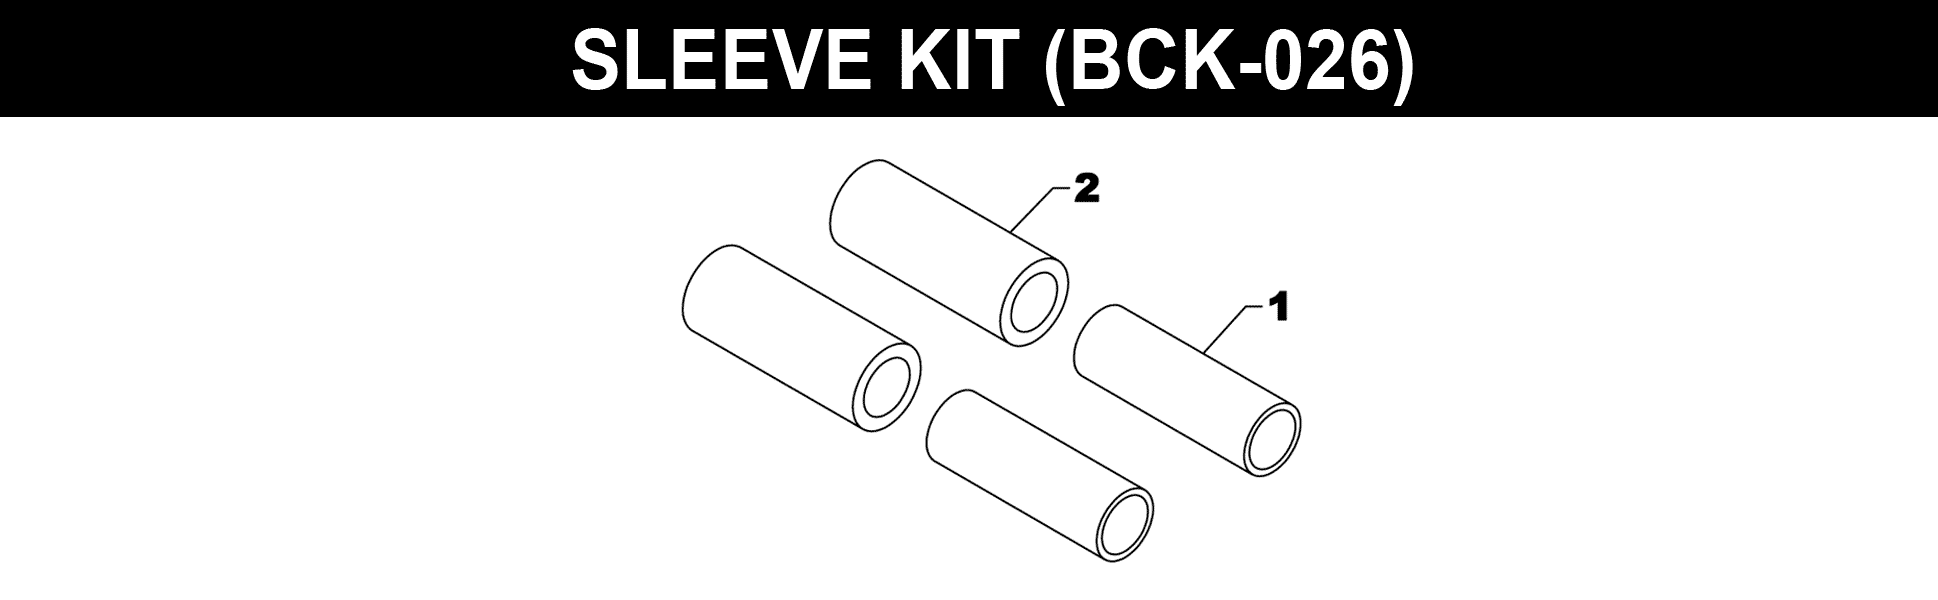 BCK-026 Sleeve Kit